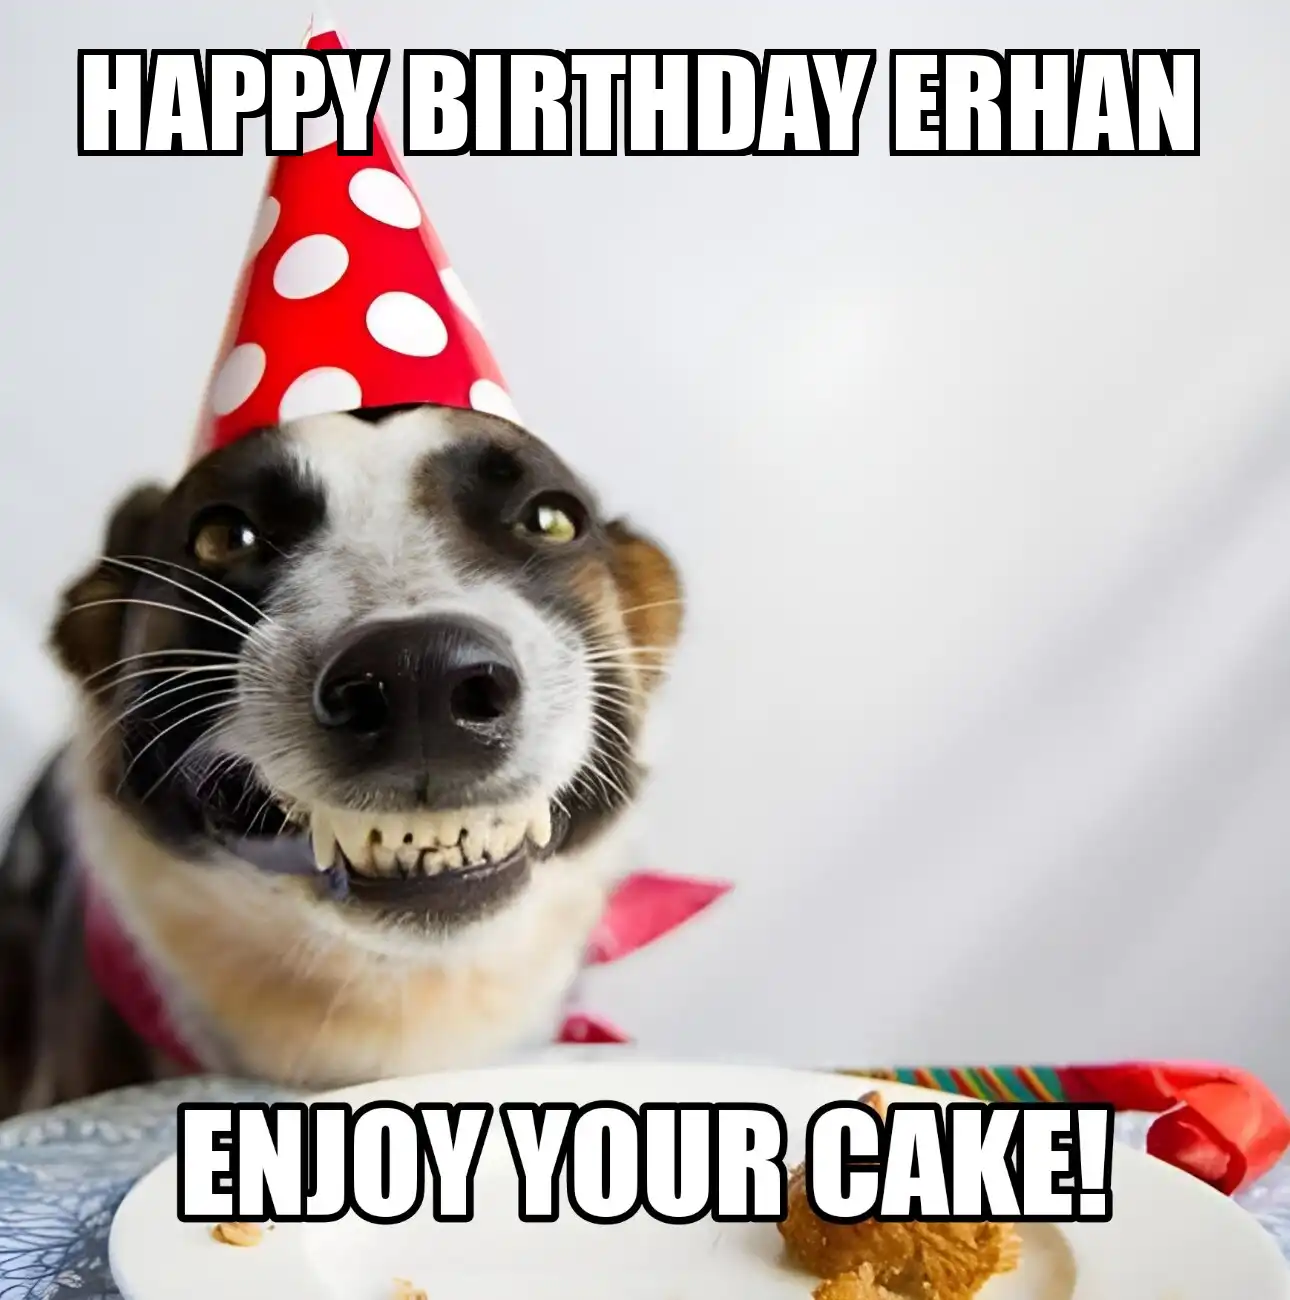 Happy Birthday Erhan Enjoy Your Cake Dog Meme